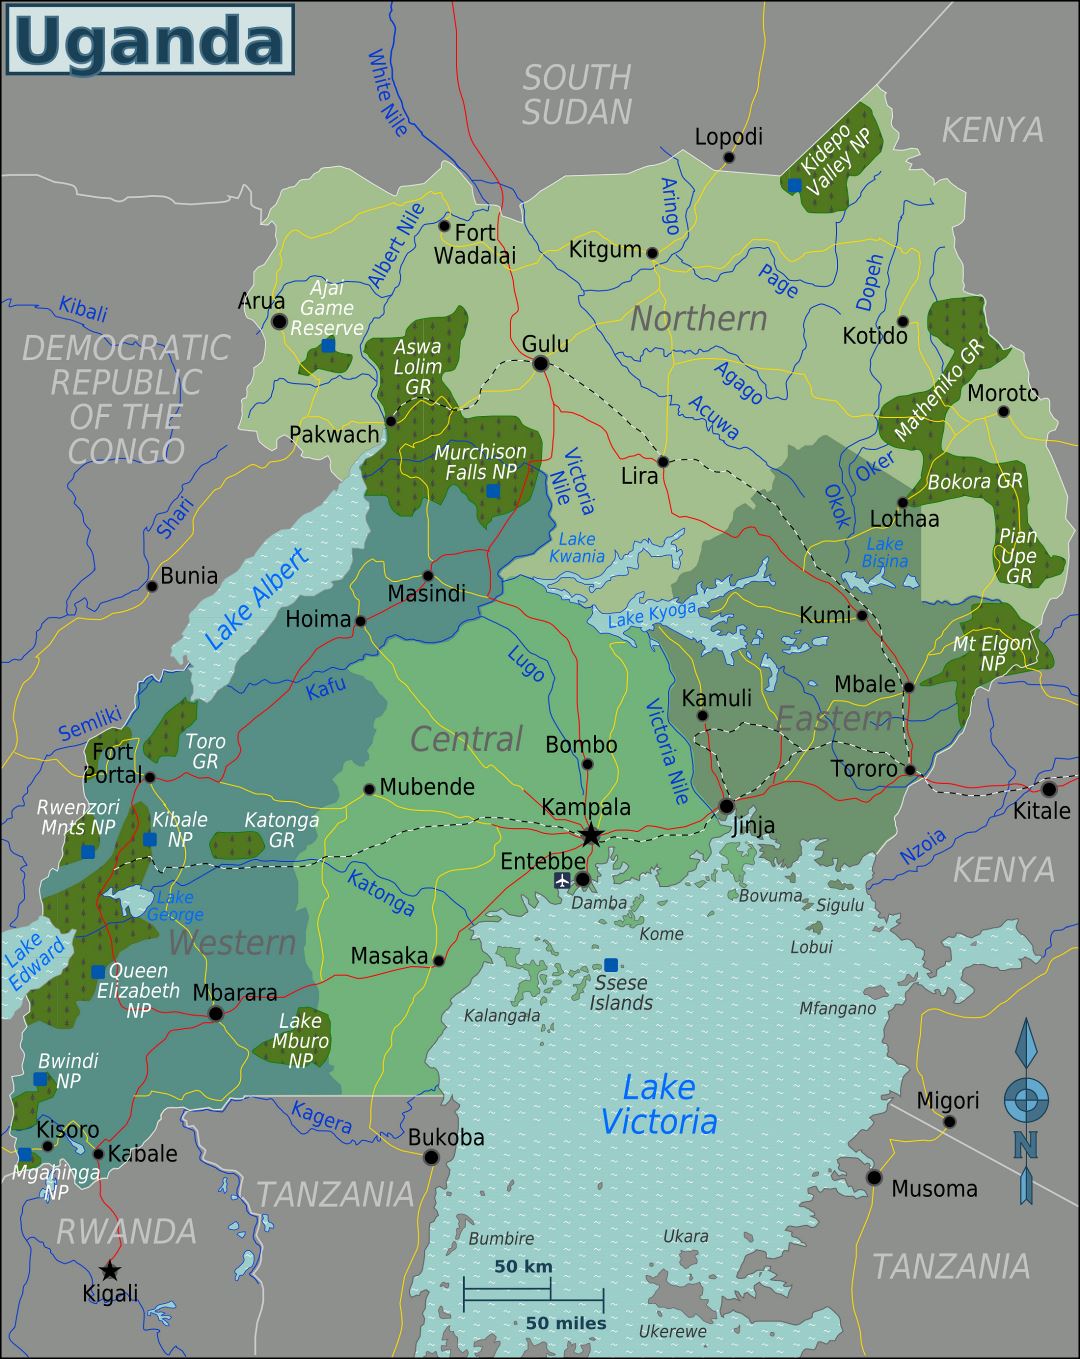 Large regions map of Uganda